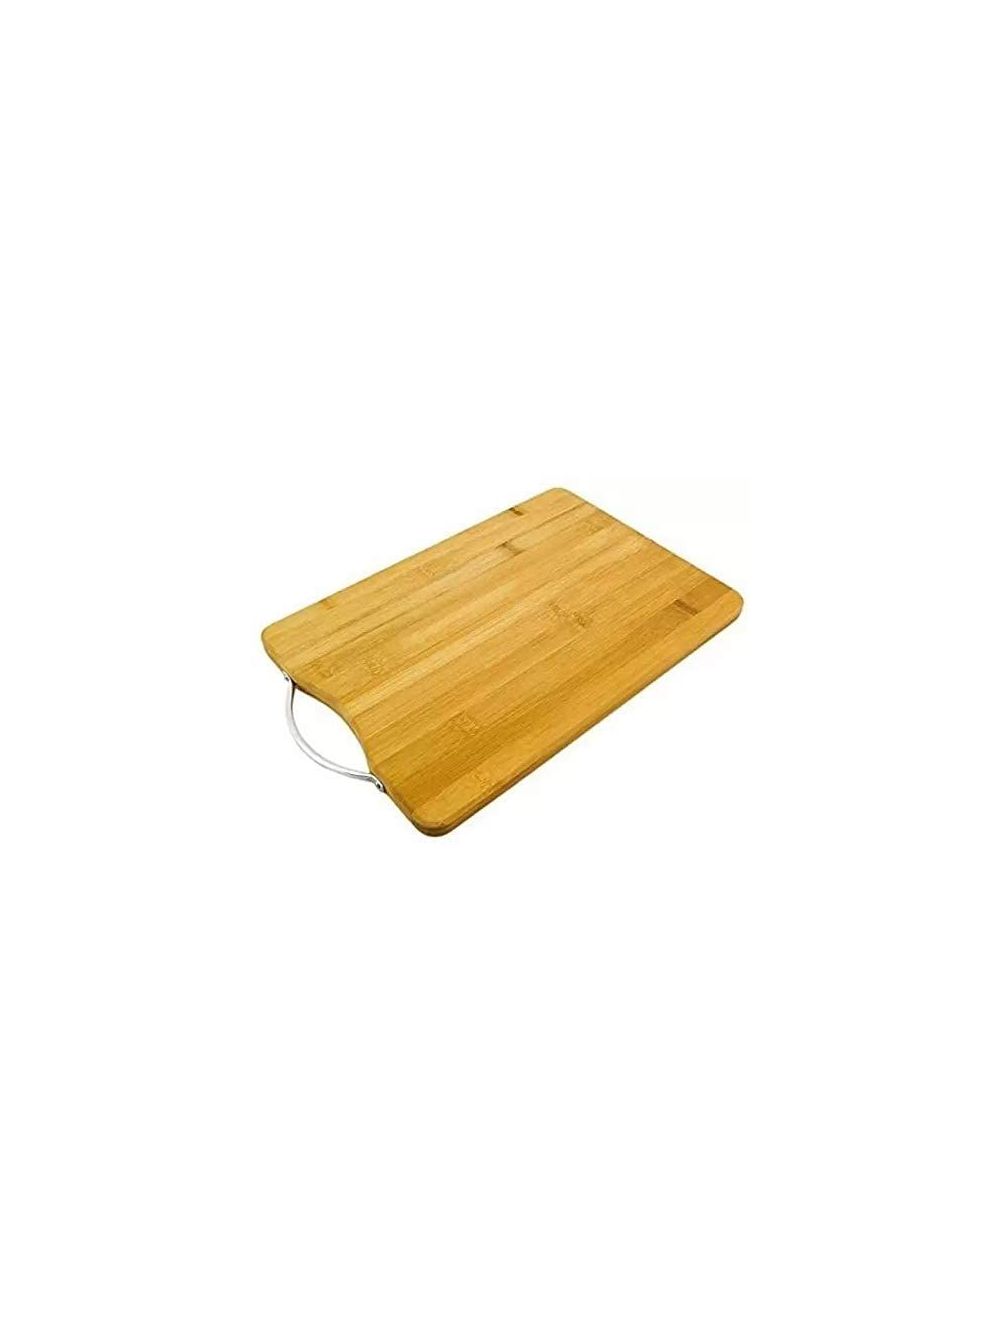 Raj Wooden Cutting Board Large, Brown, CWCB003